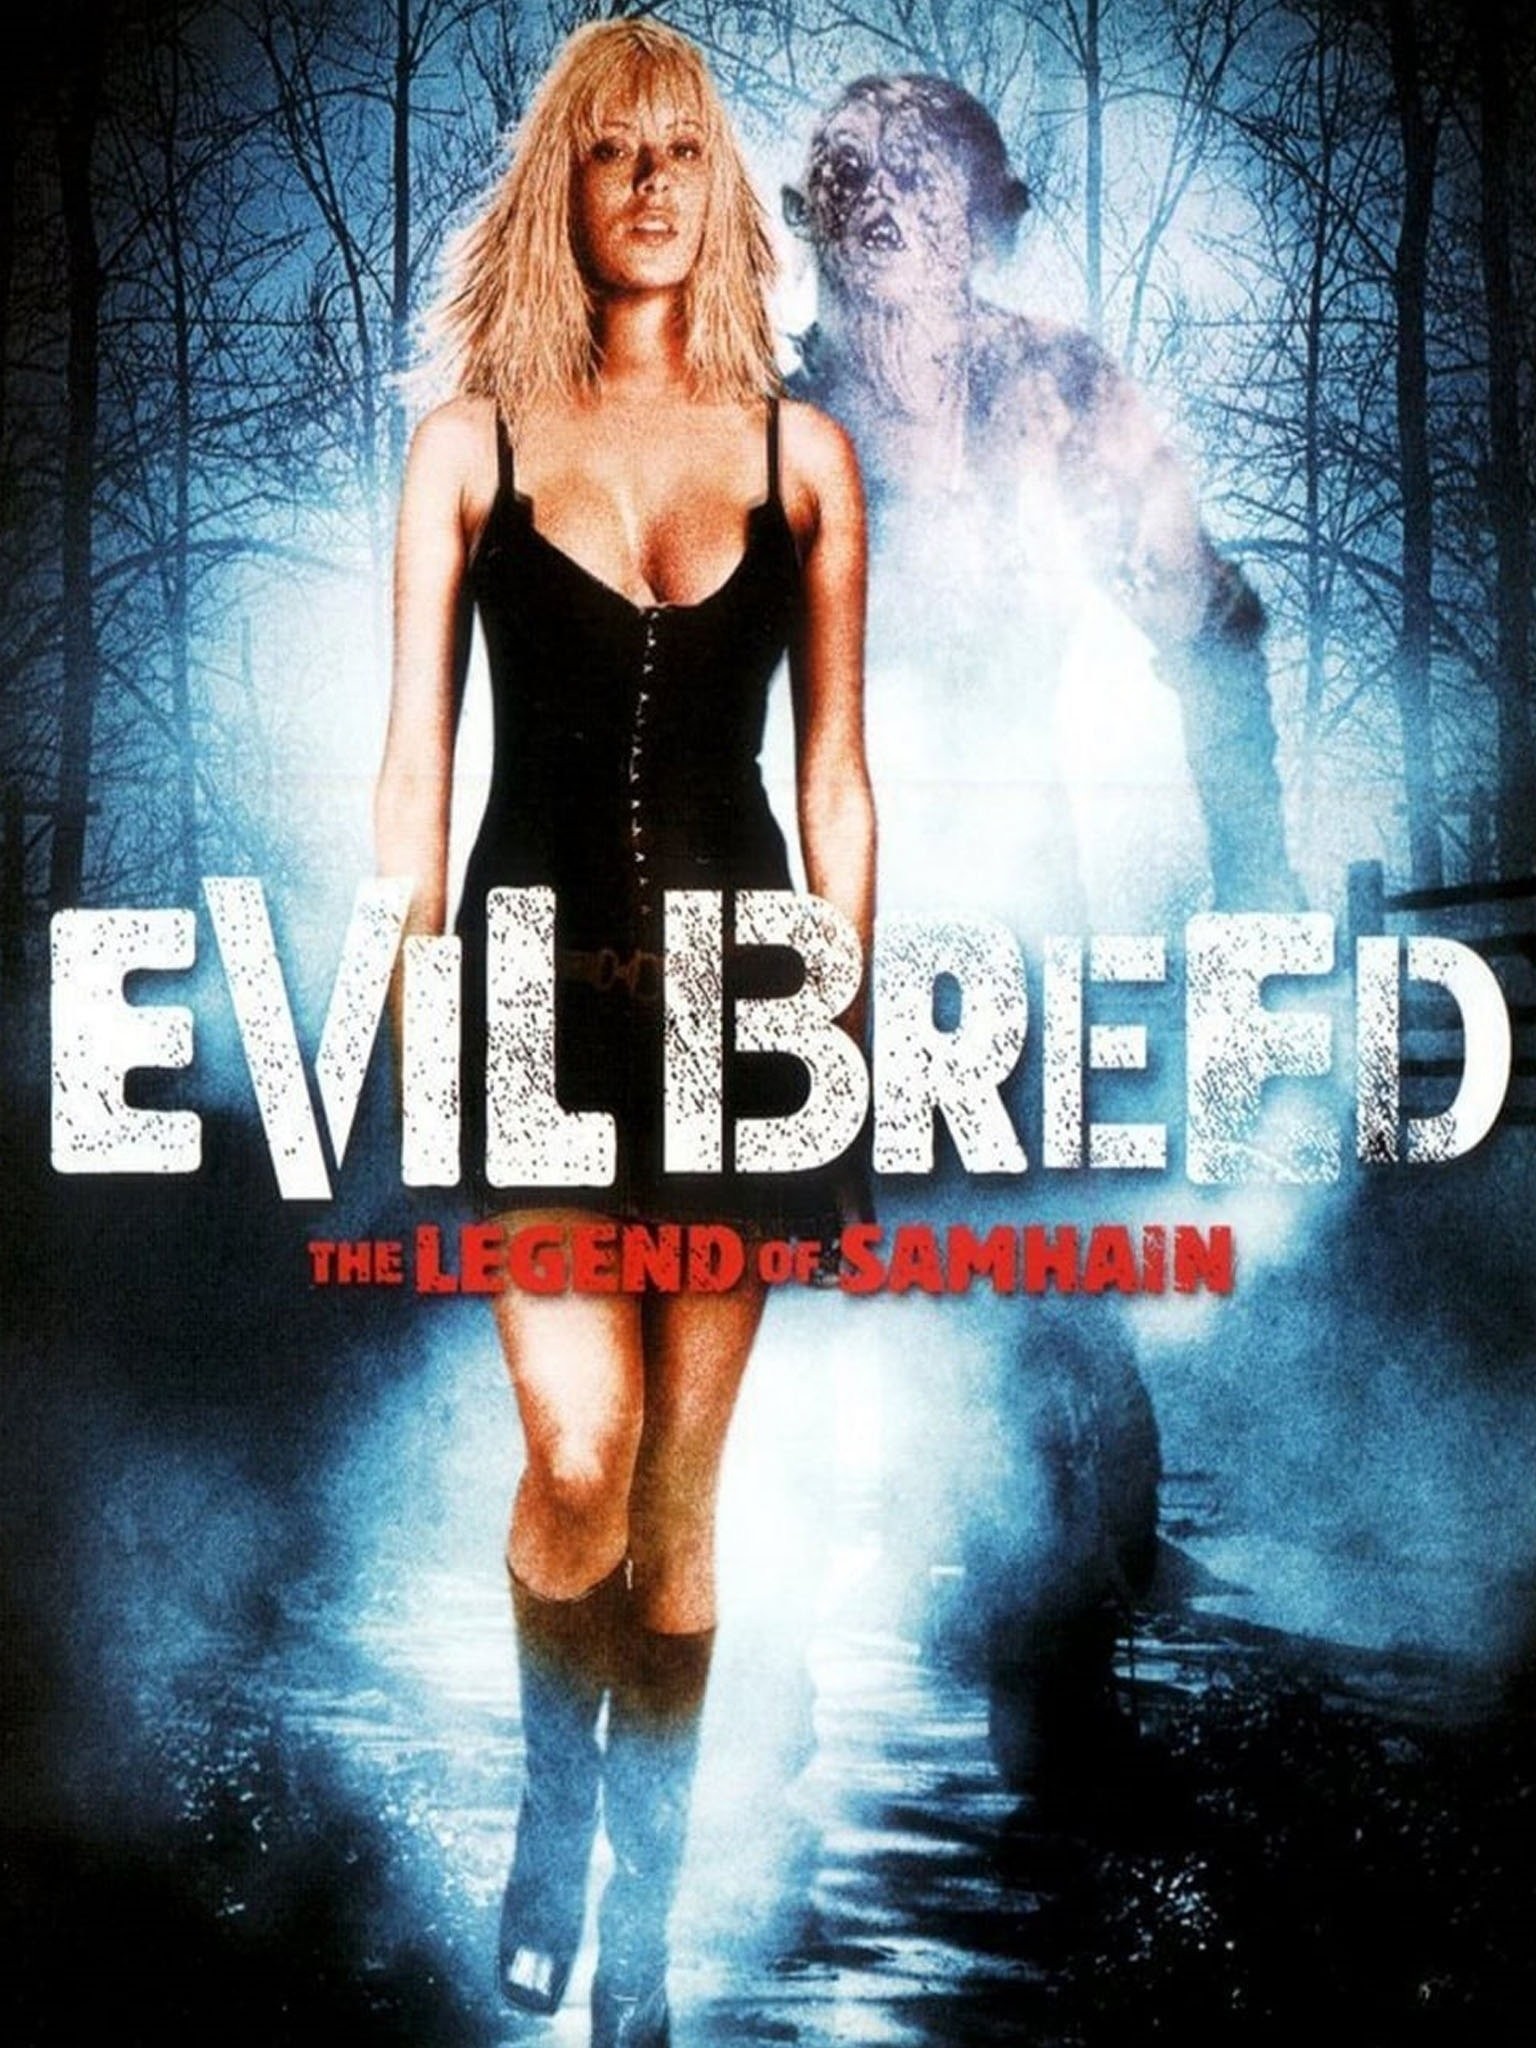 Evil breed the legend of samhain movie